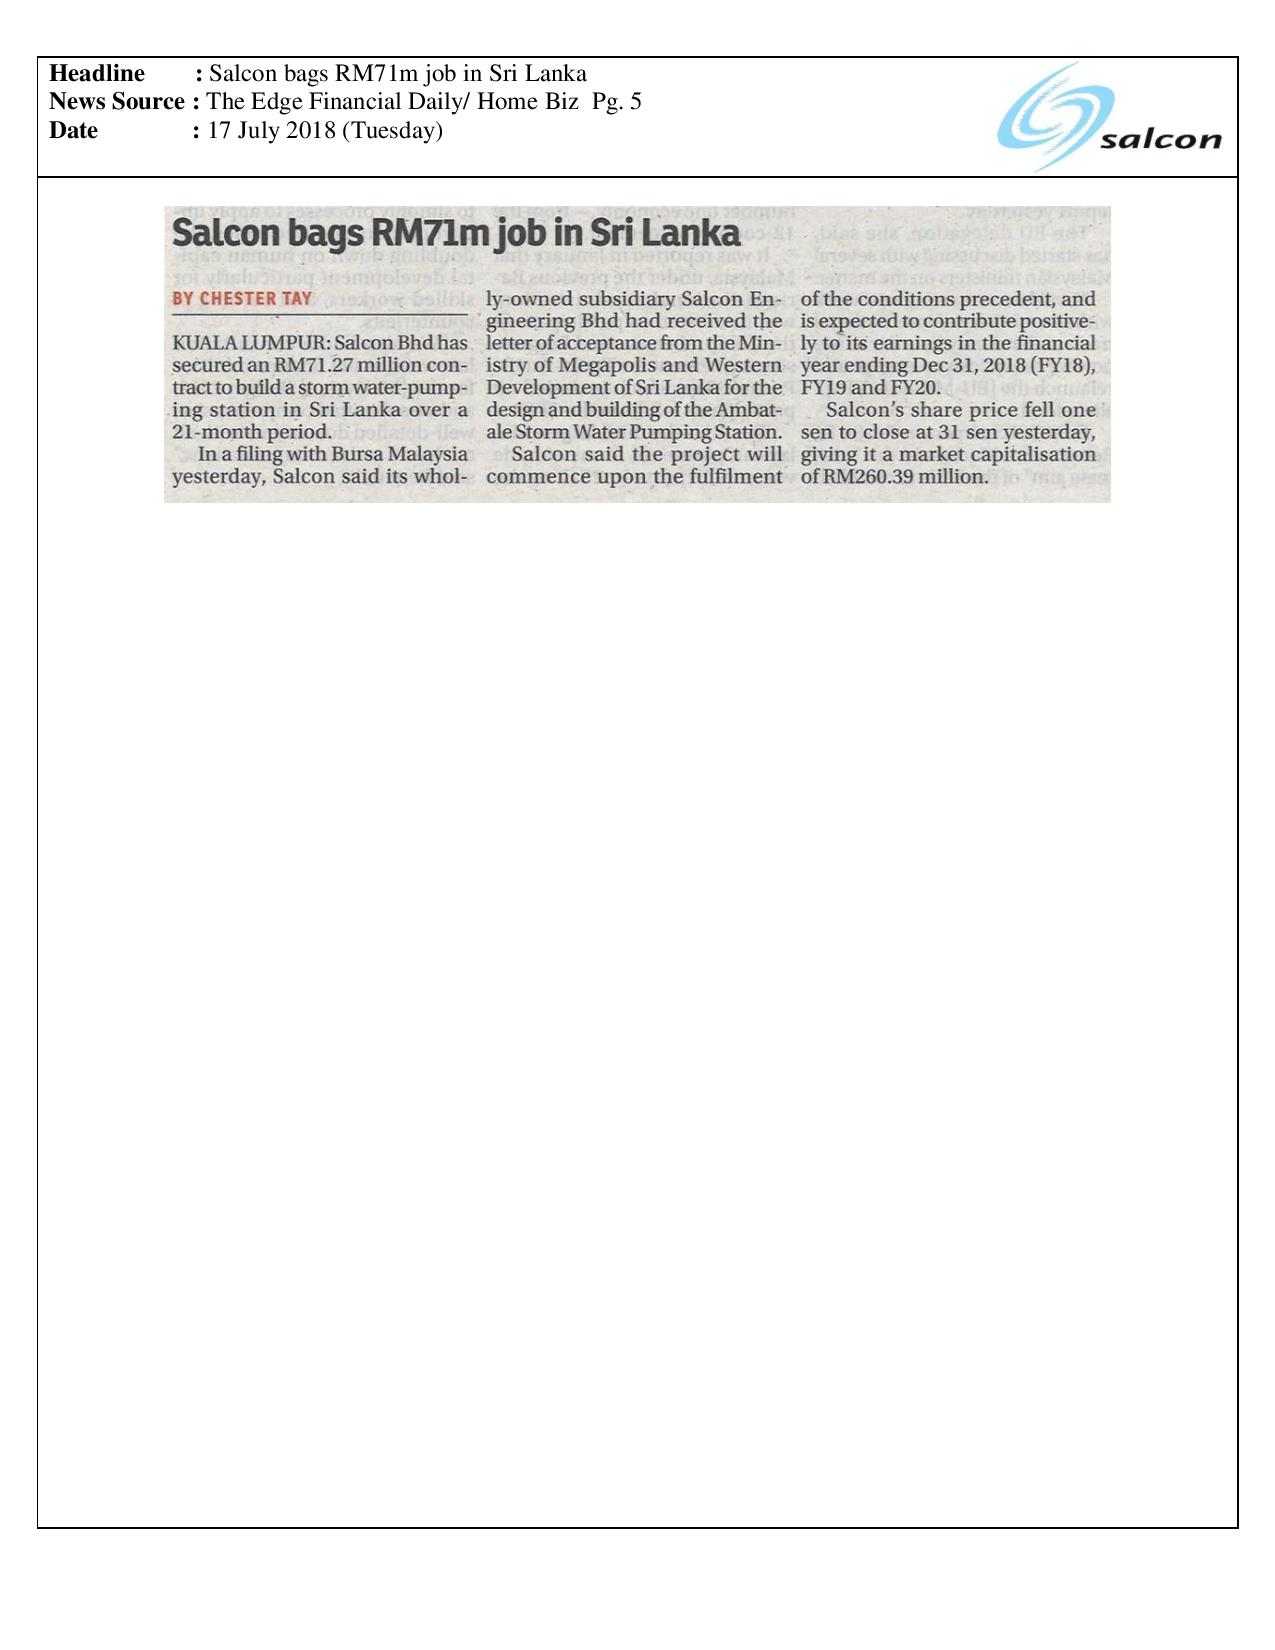 Salcon bags RM71m job in Sri Lanka